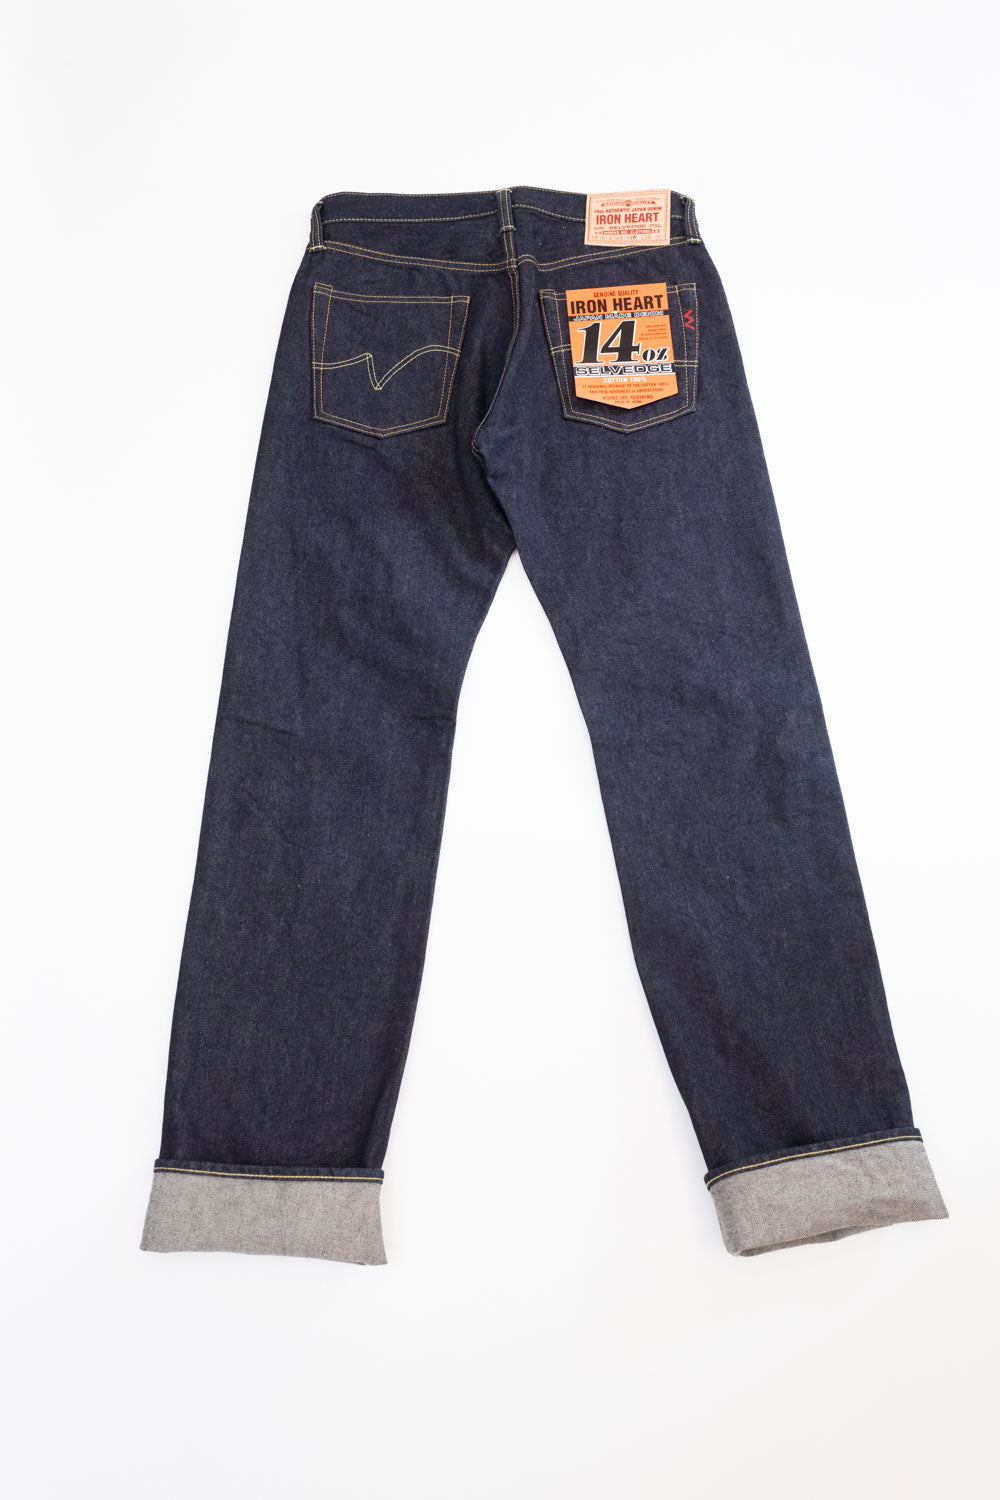 IH-634S-142 - 14oz Selvedge Denim Straight Cut Jeans - Indigo ...